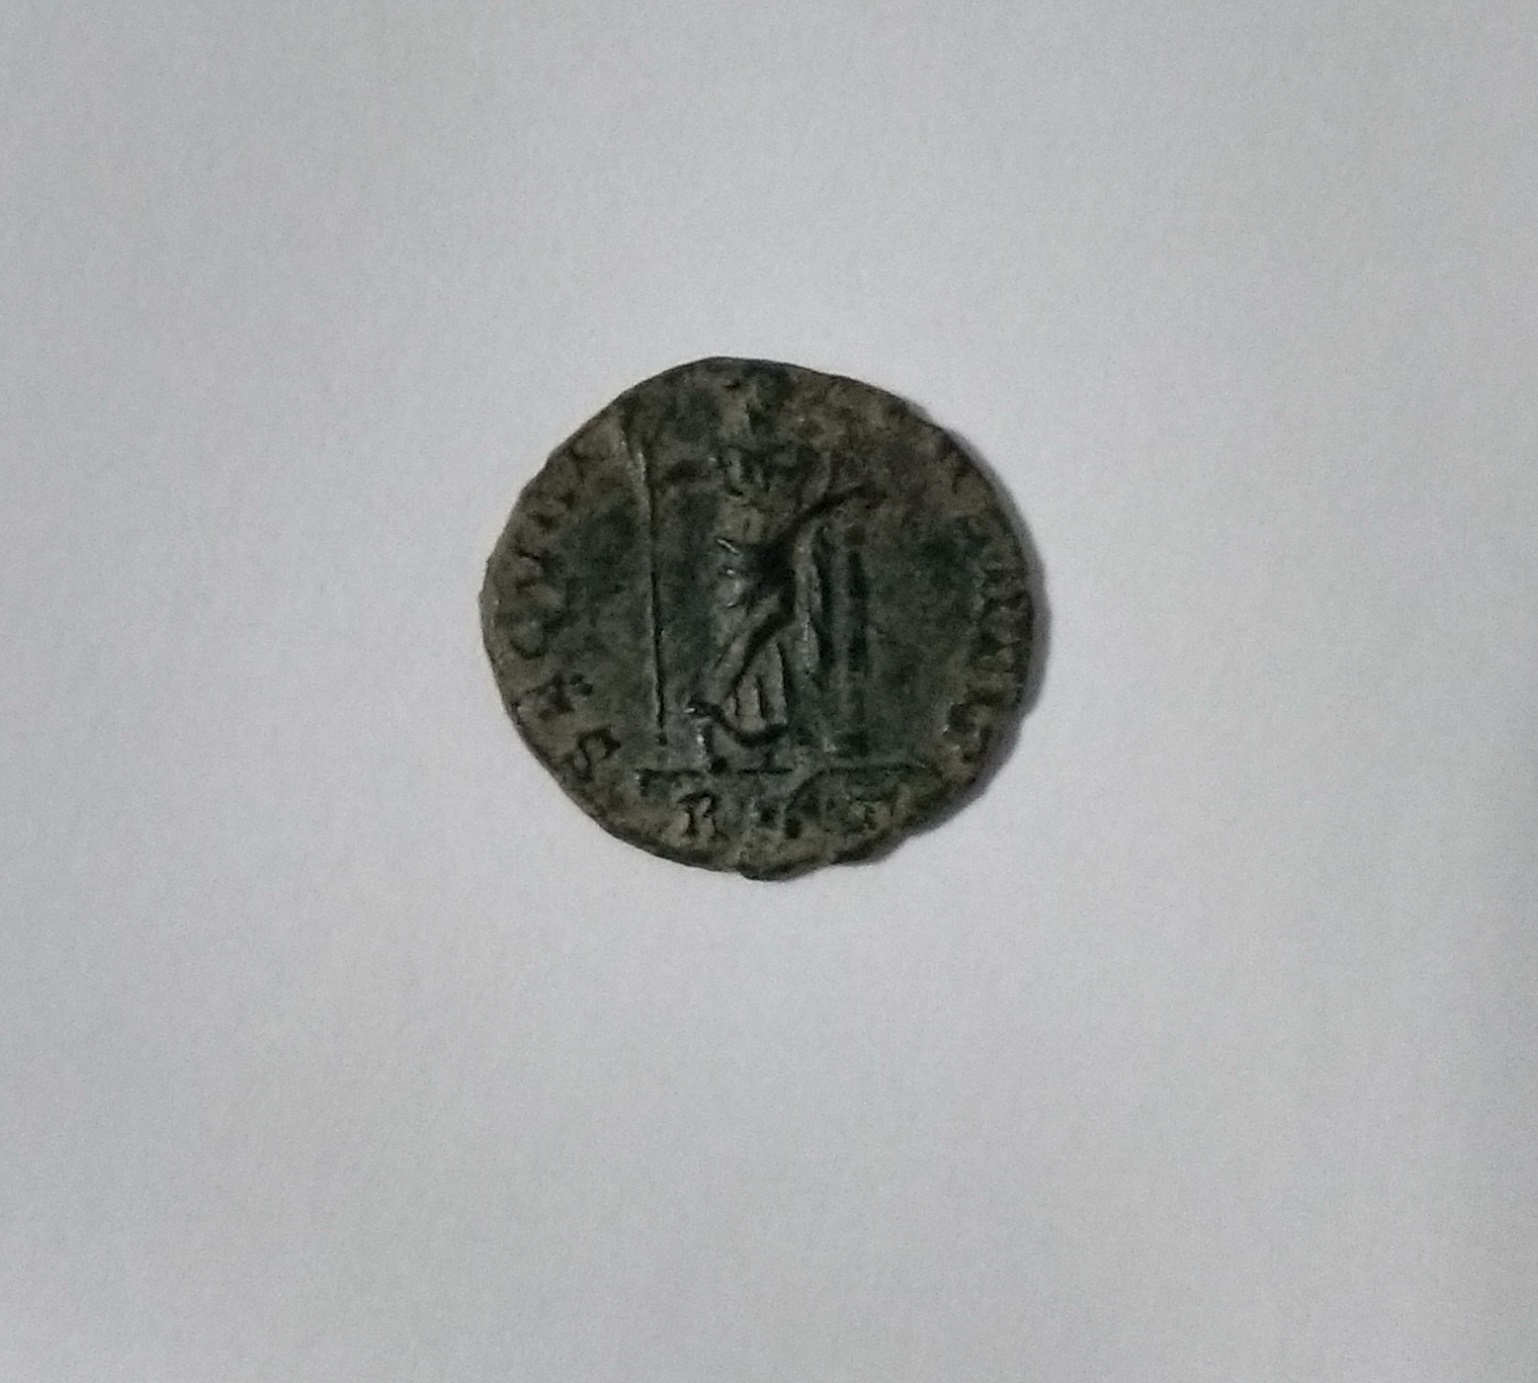 Limpiar/medio restaurar monedas posiblemente romanas Jtqhhh